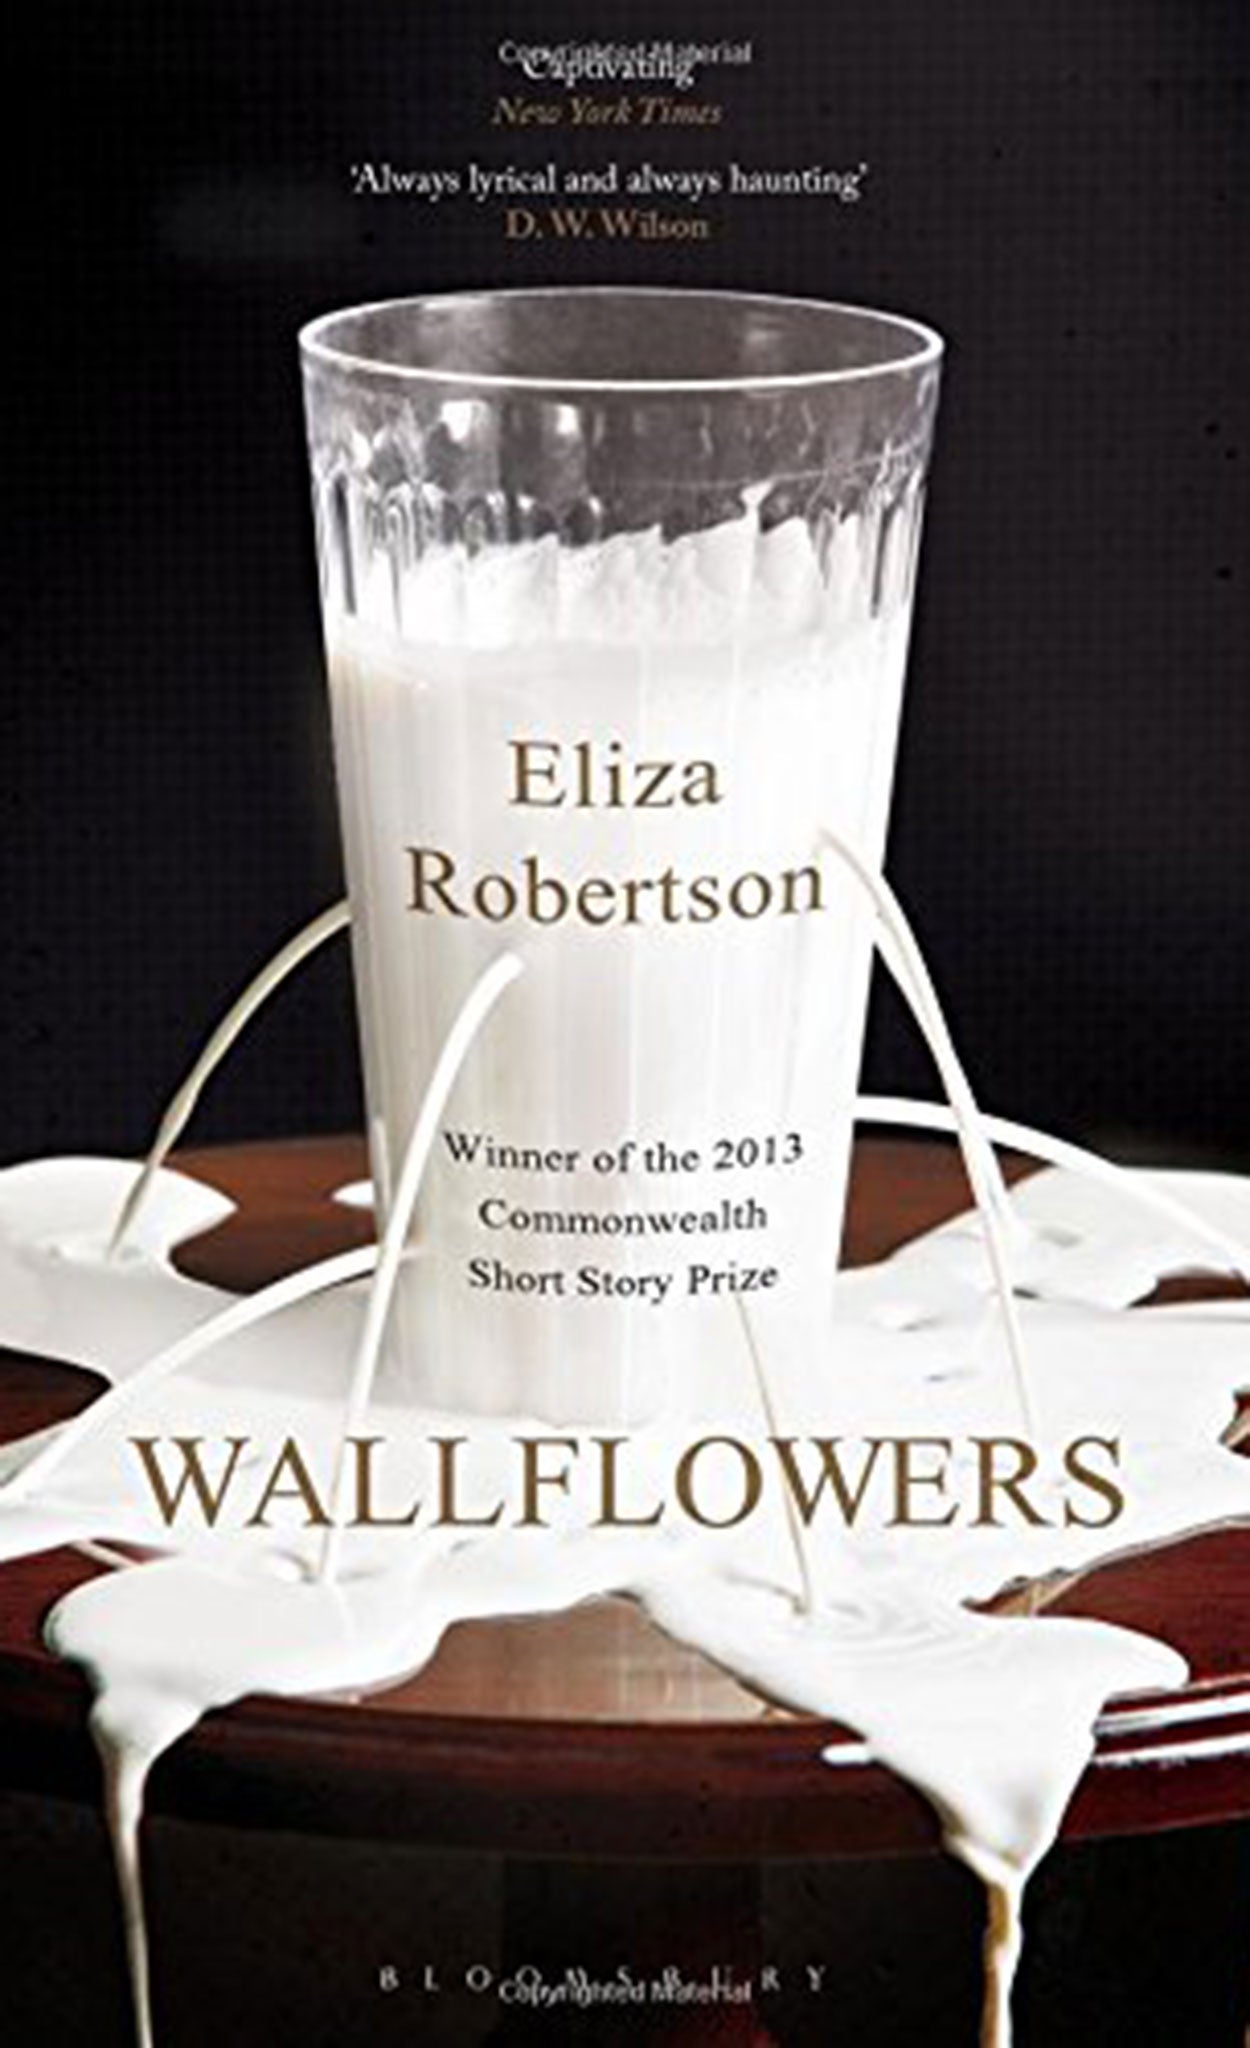 'Wallflowers' by Eliza Robertson